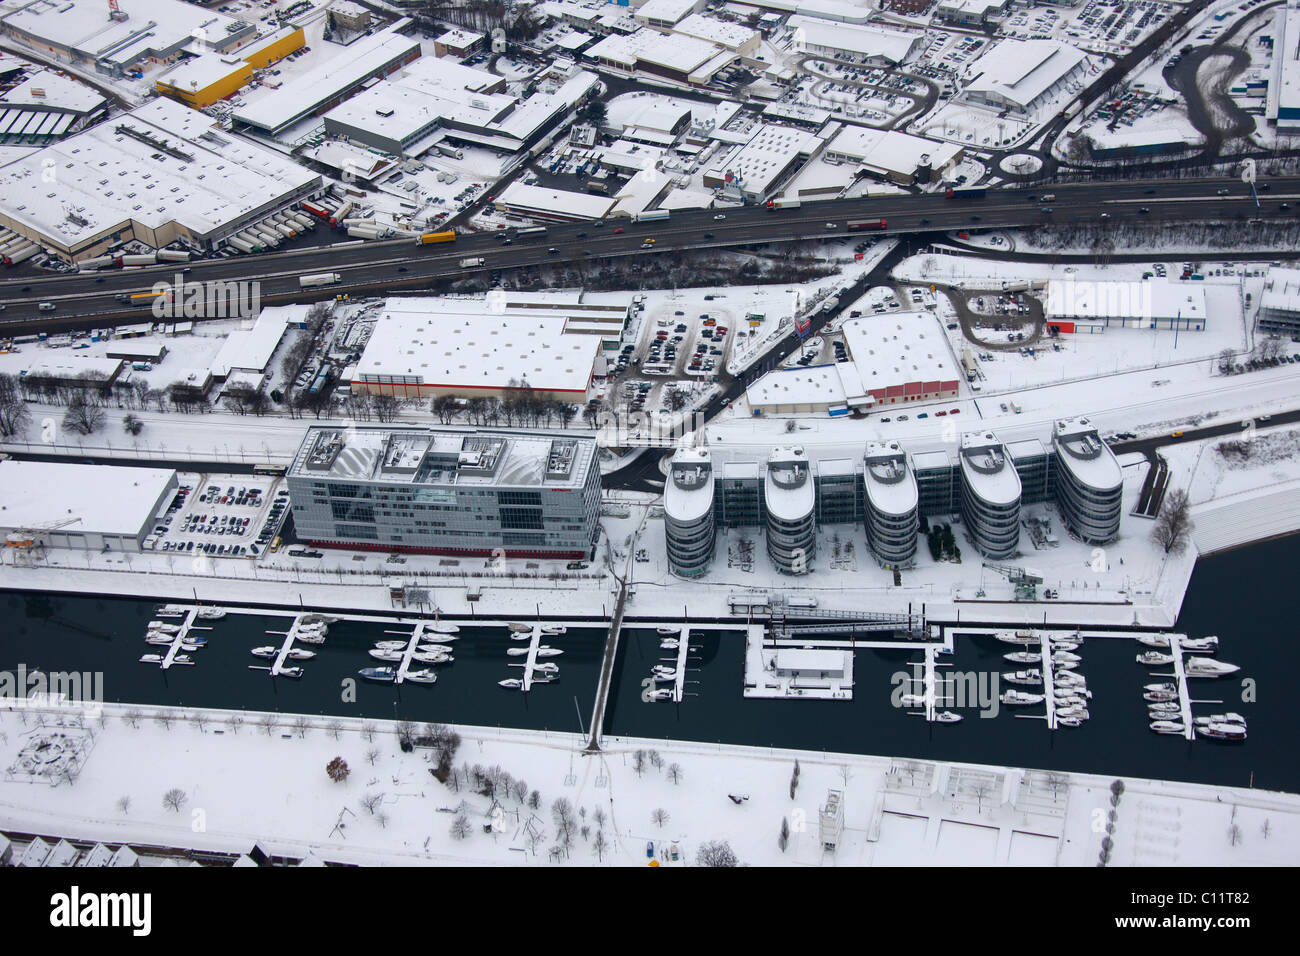 Aerial view, Alltours headquarters, Fiveboats buildings, Hitachi, Innenhafen harbor, Duisburg, Ruhrgebiet region Stock Photo